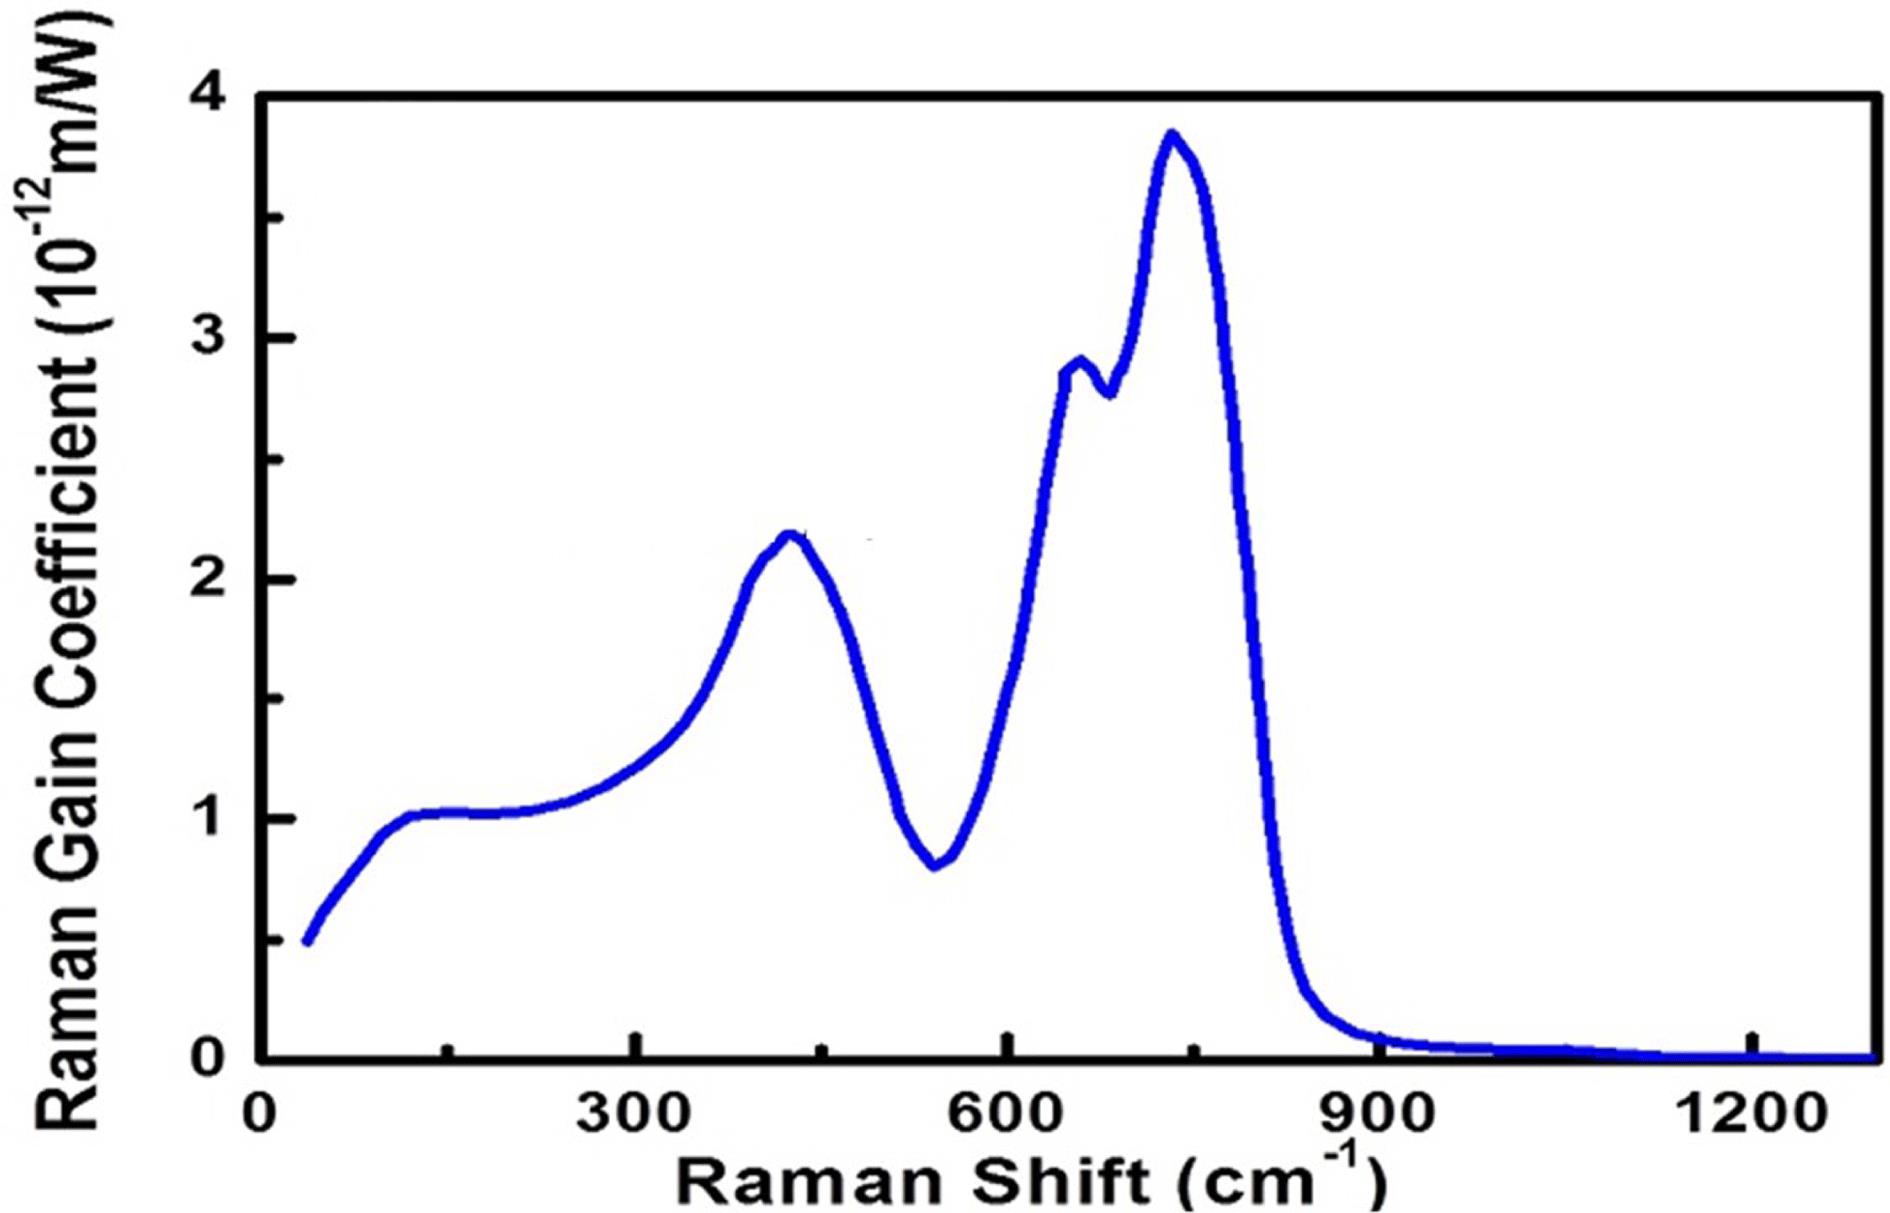 Raman gain coefficient of TBZN fibre pumped at 632.8 nm [30].